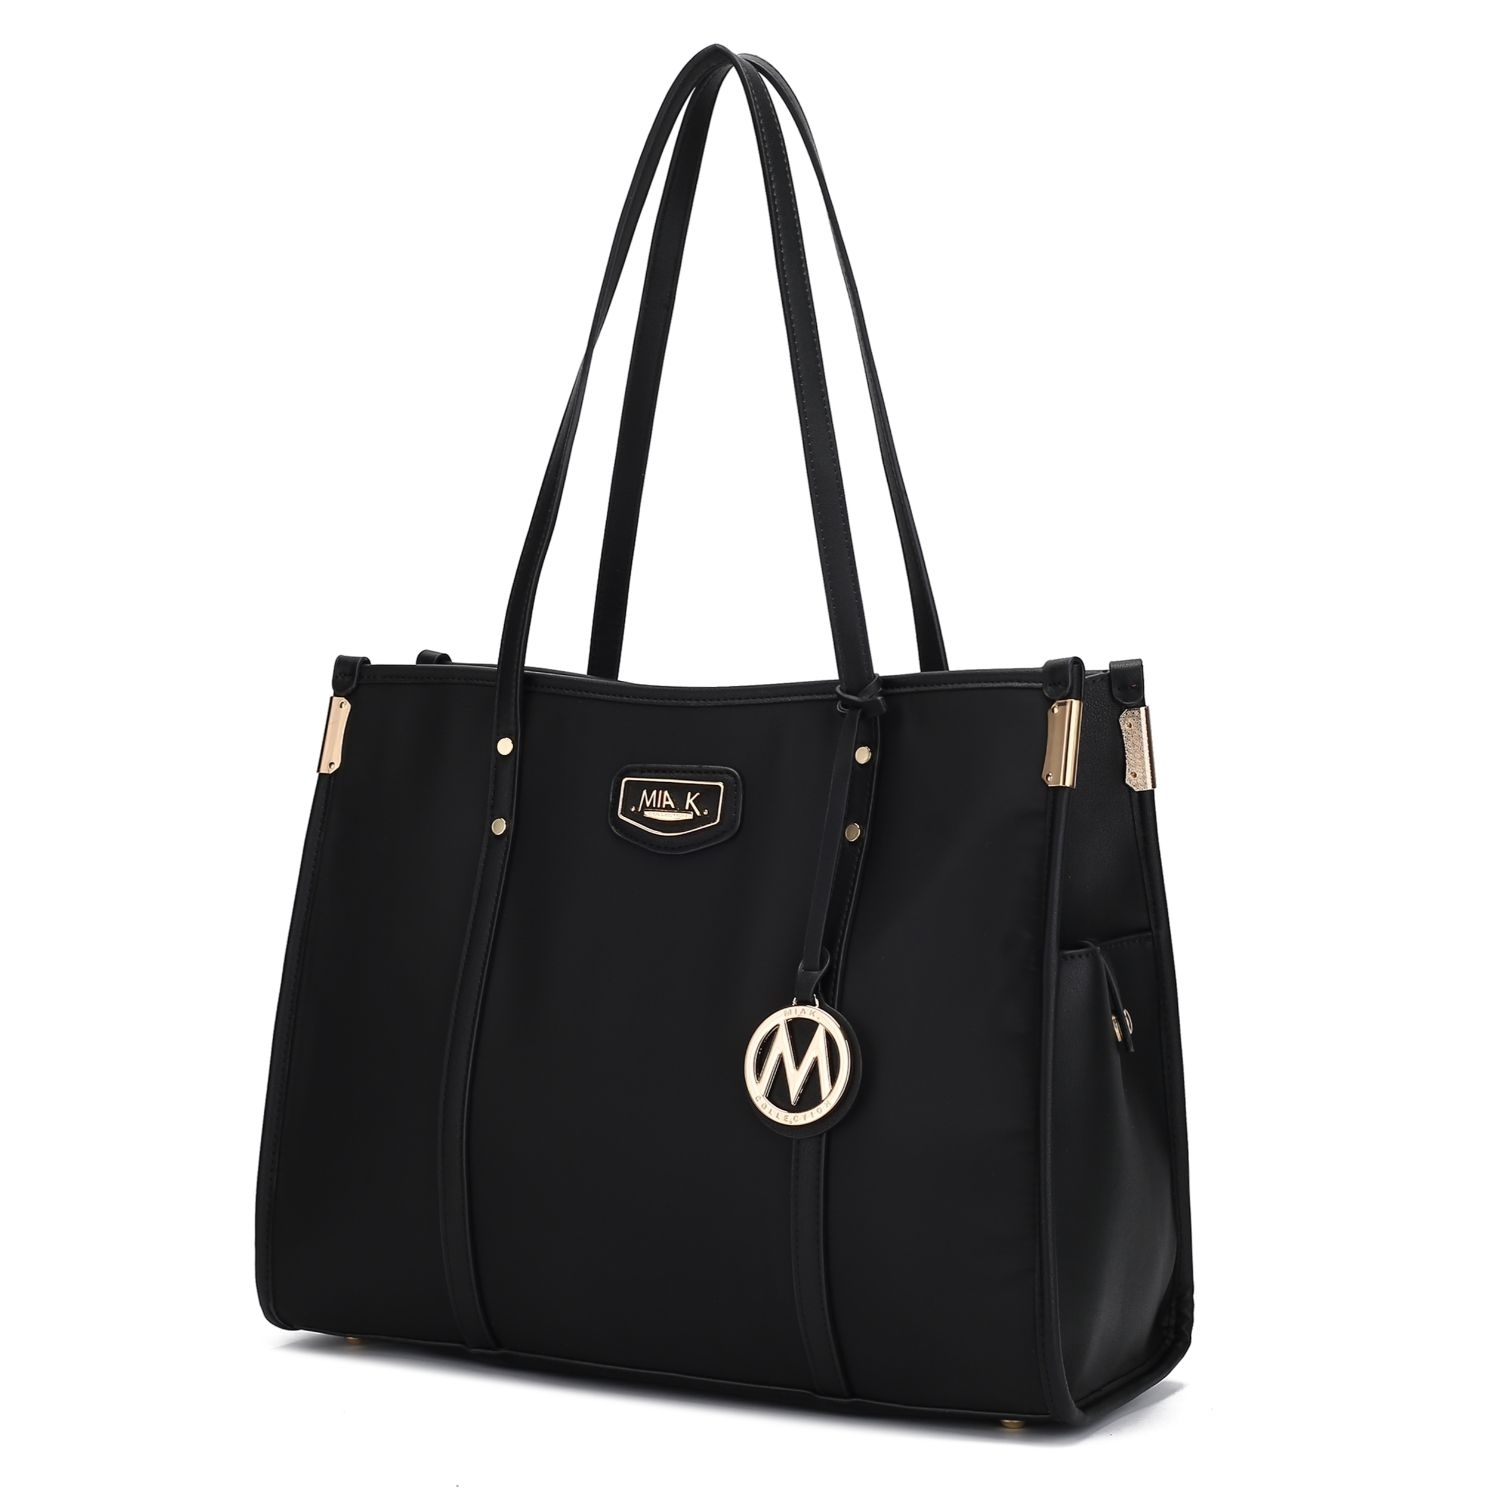 MKF Collection Kindred Oversize Tote Handbag By Mia K. - Black Black